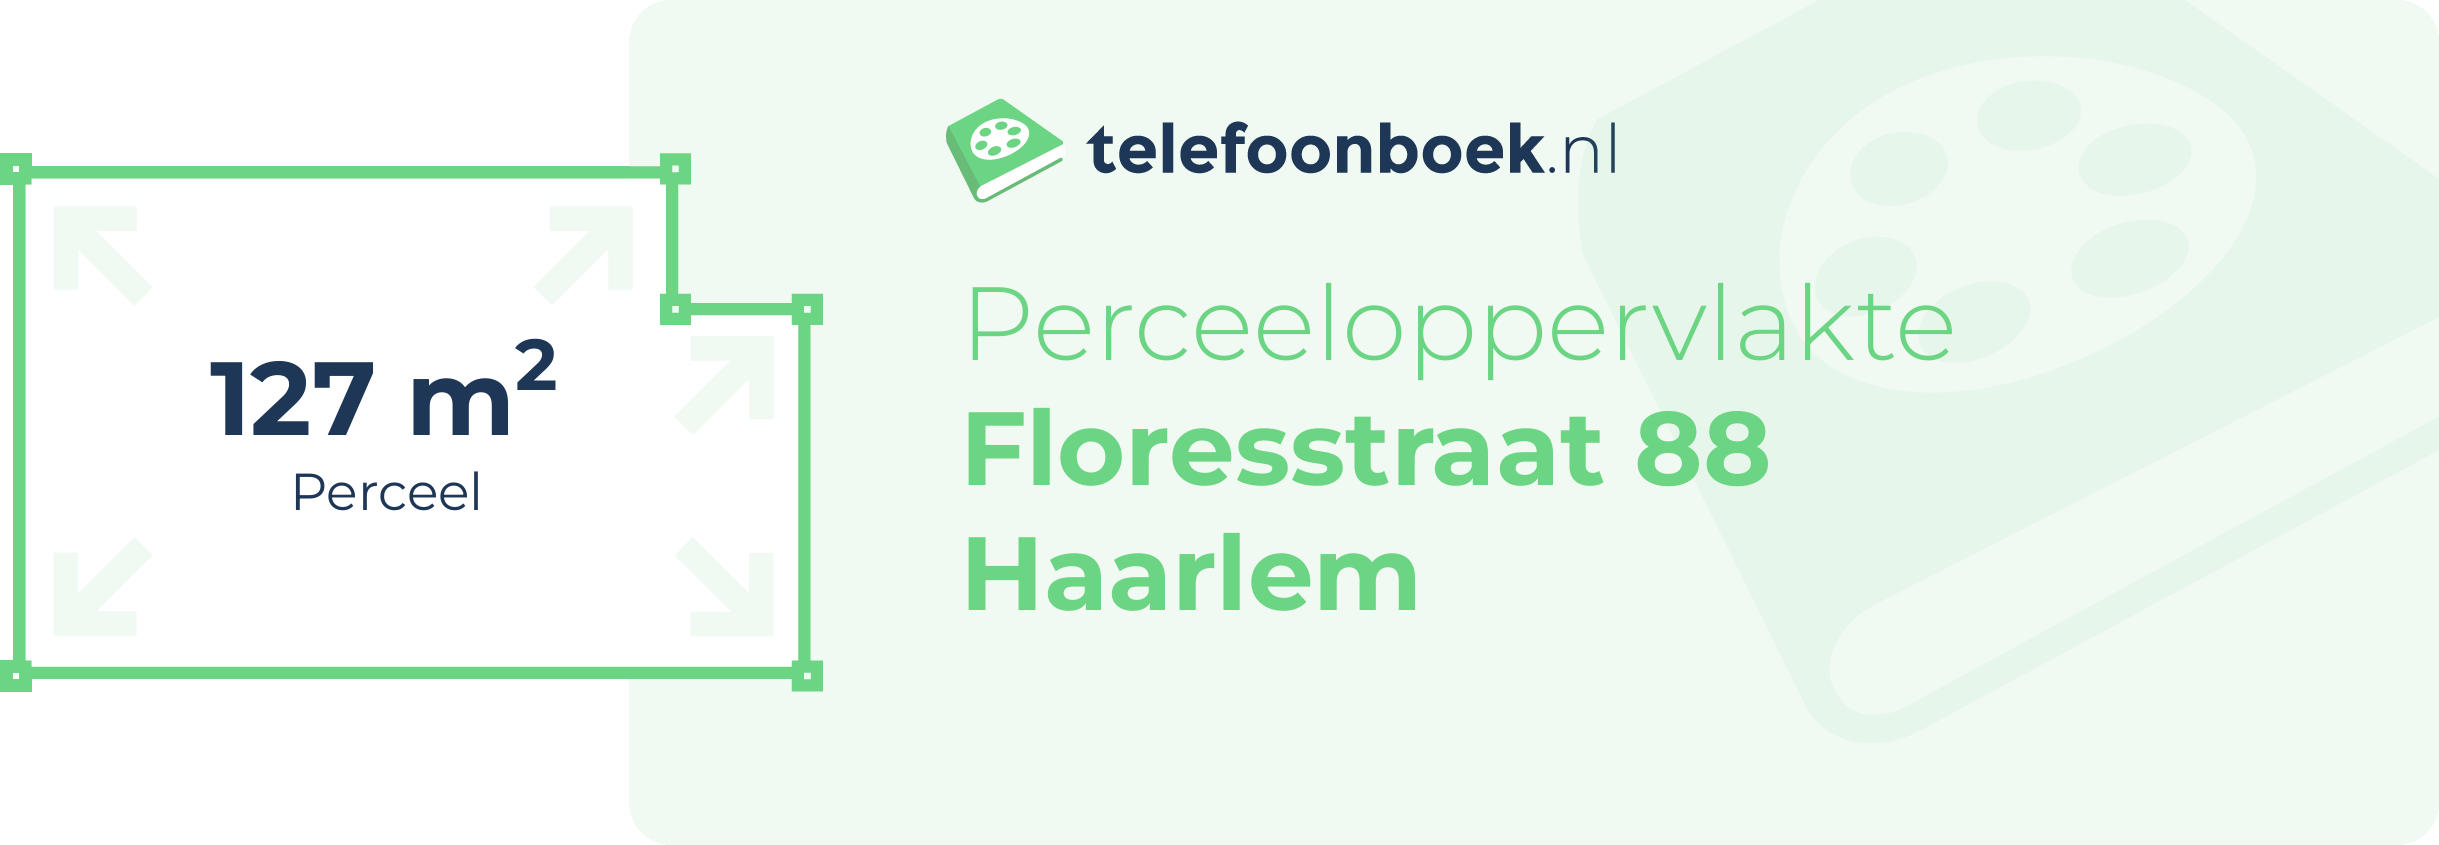 Perceeloppervlakte Floresstraat 88 Haarlem